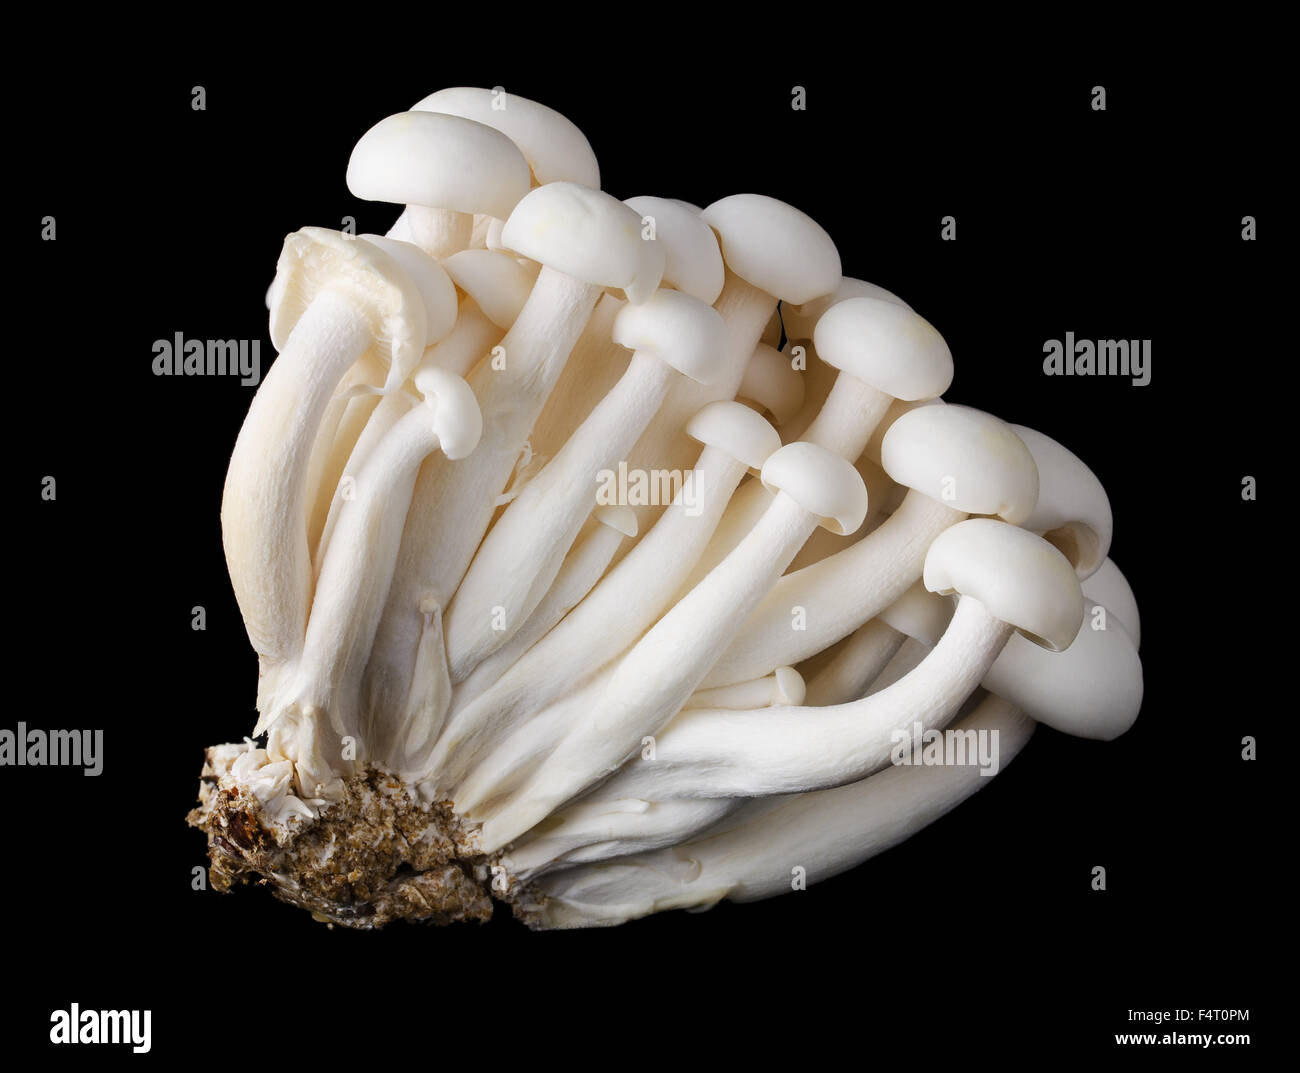 White beech mushrooms, bunapi shimeji, also called white clamshell mushrooms, an edible fungus on black background. Stock Photo